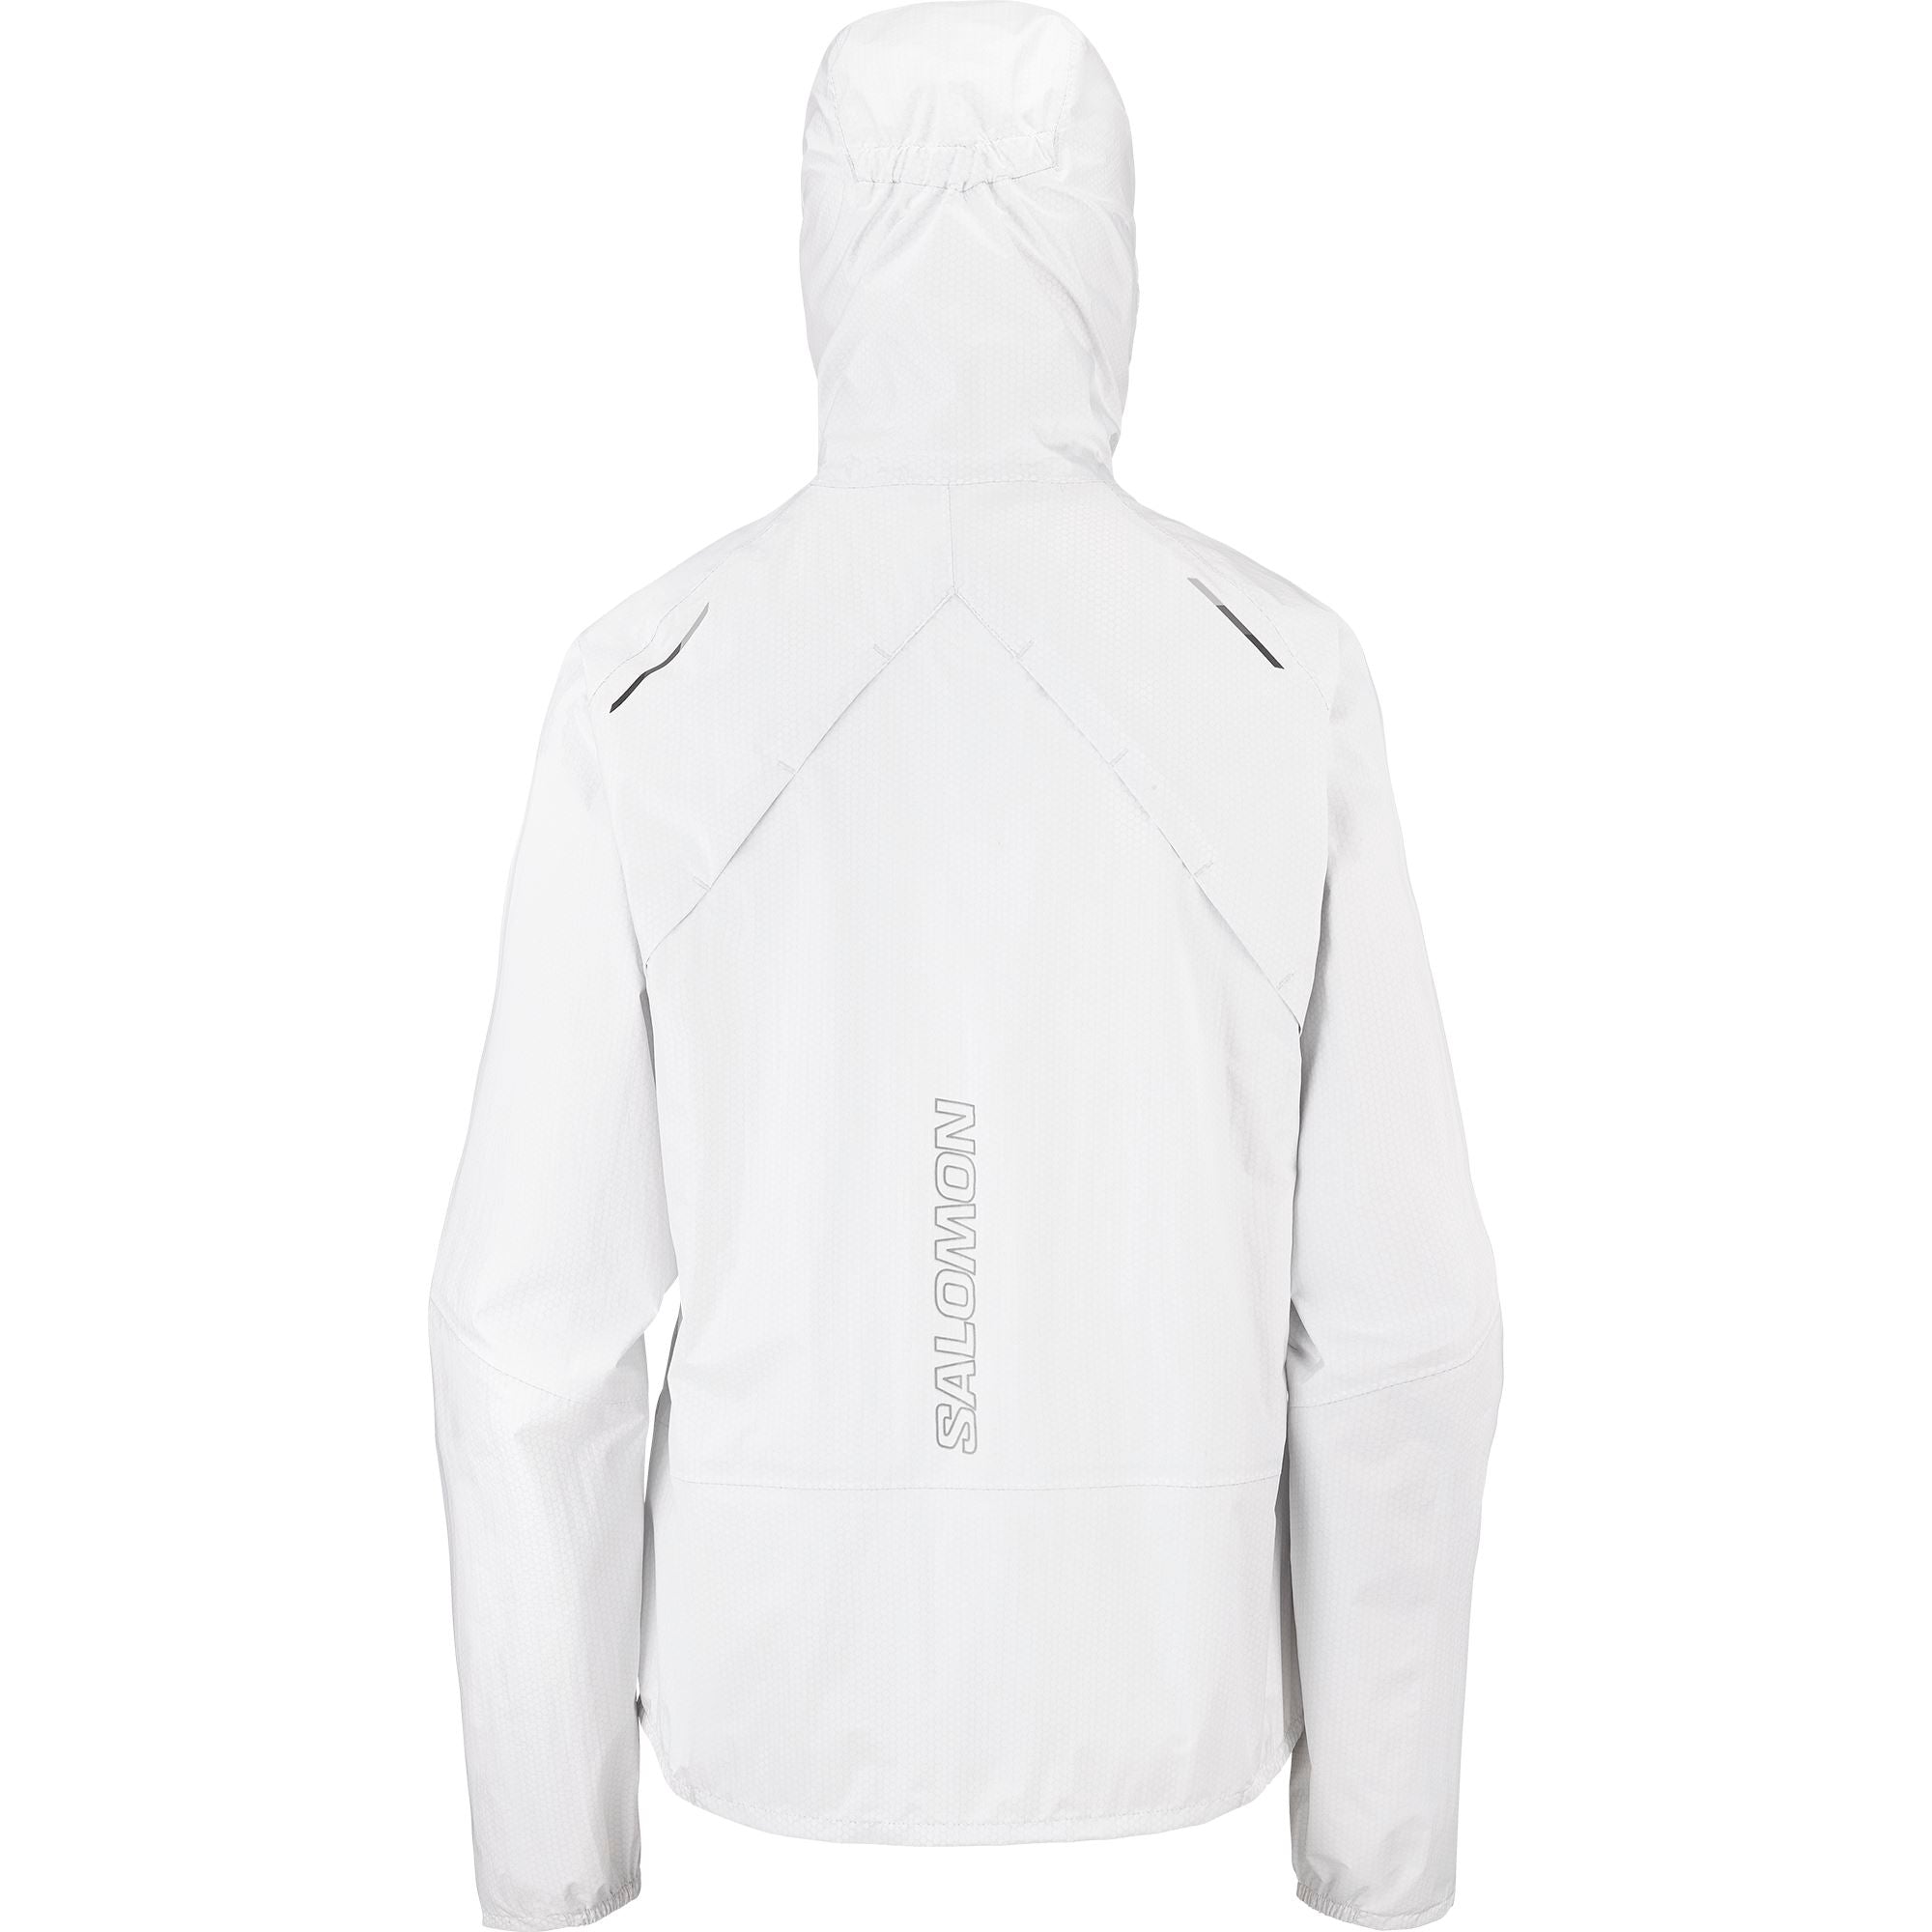 Salomon Bonatti Waterproof Women's Shell Jacket White XS 